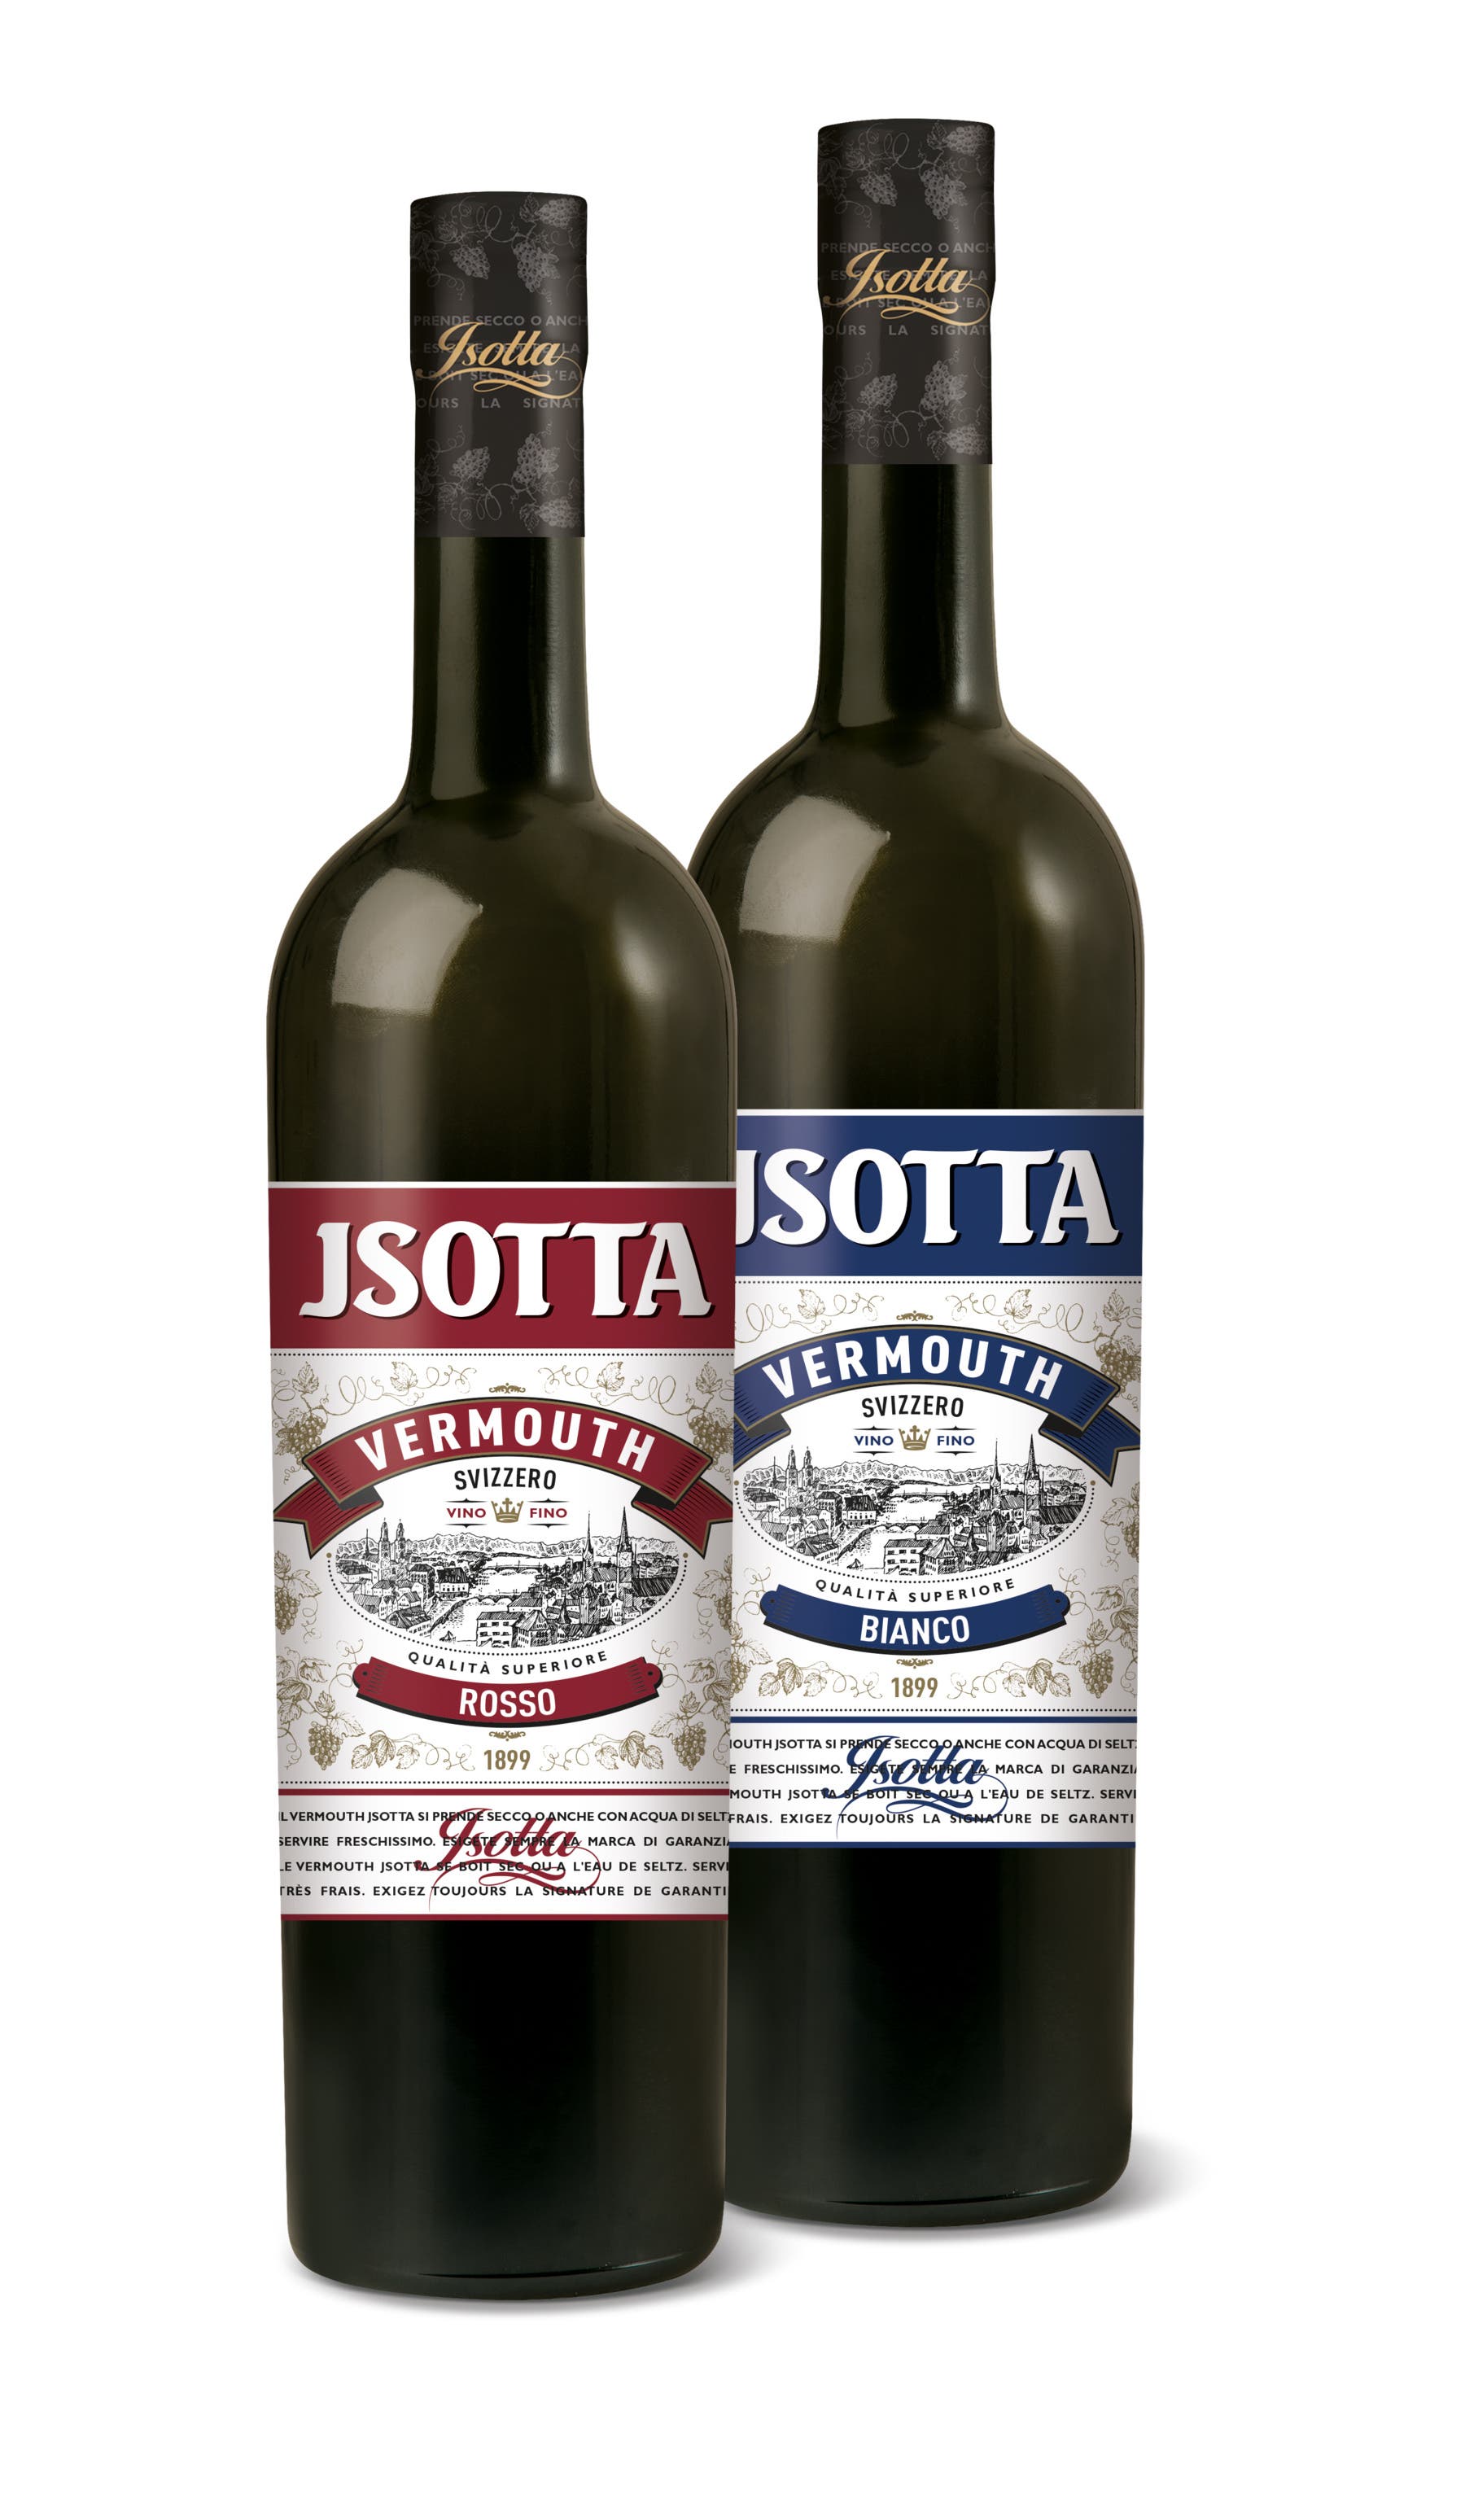 Jsotta (21.90) ist wohl der beliebteste...